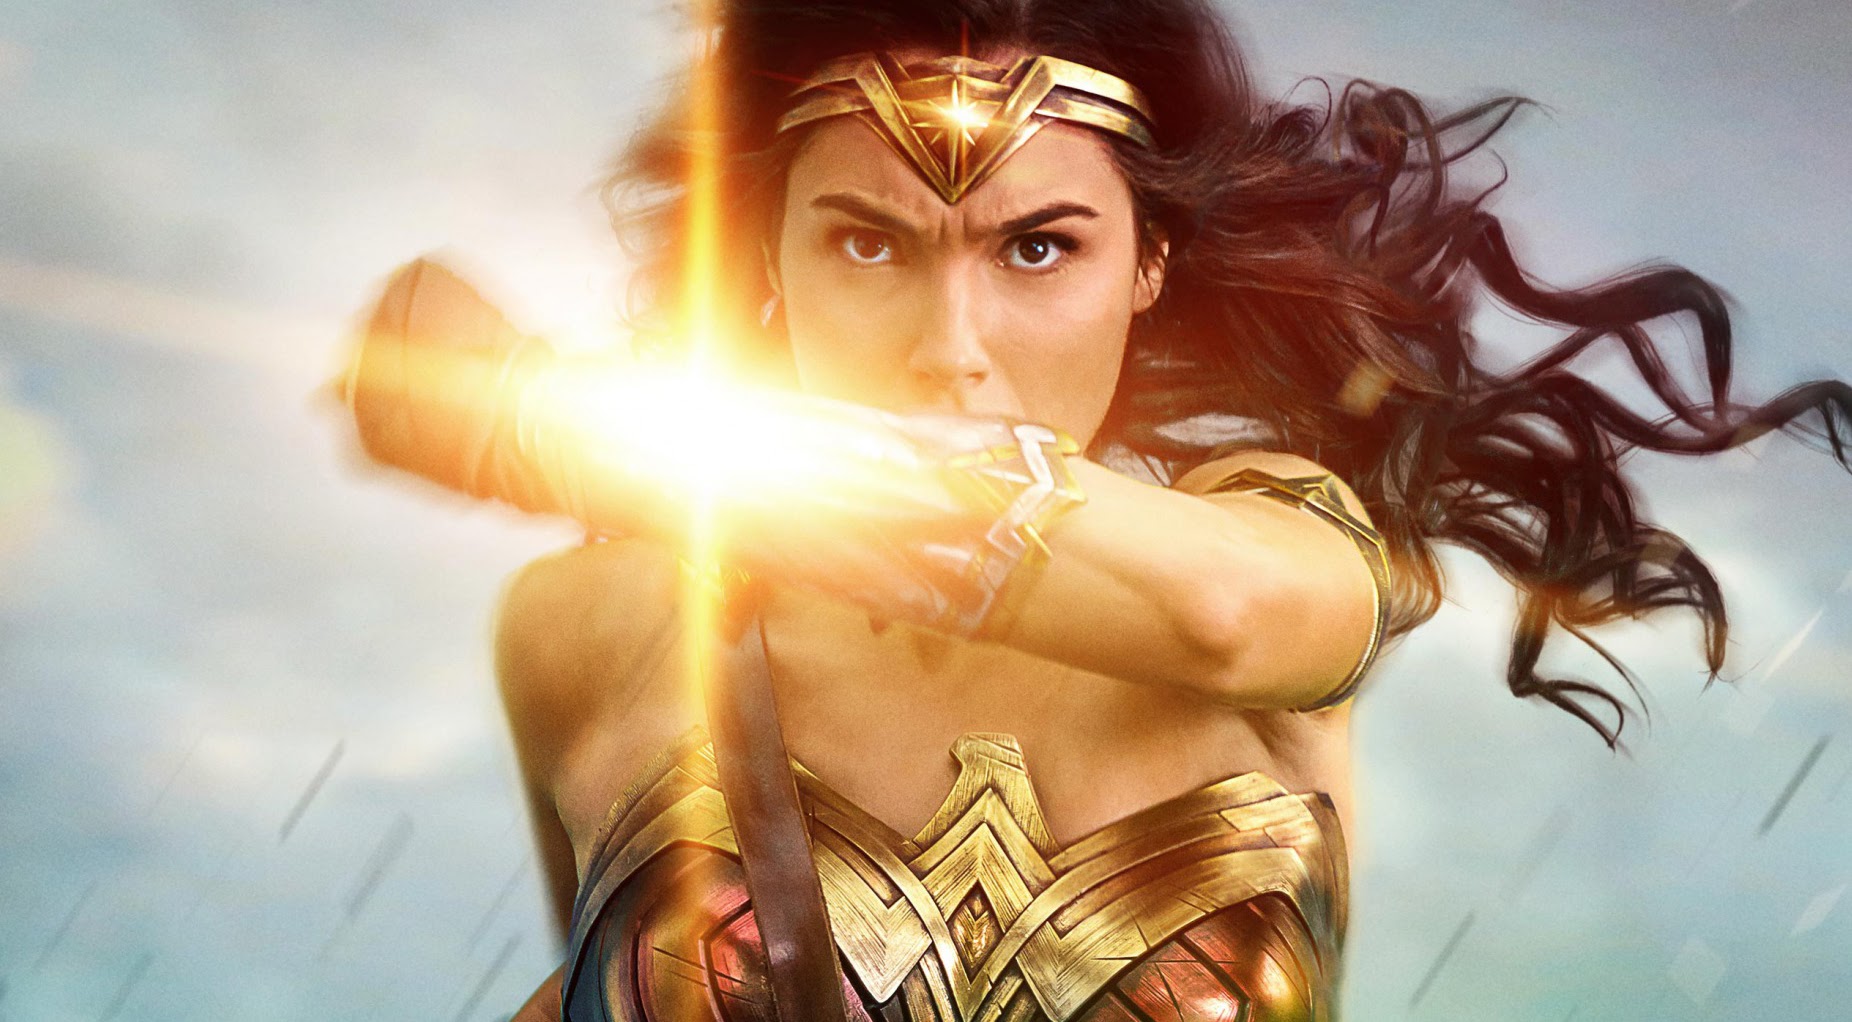 Wonder Woman ガル ガドットが再び ブーシュ を炸裂させる続篇 ワンダーウーマン 2 が ついに全米公開日を発表 Cia Movie News